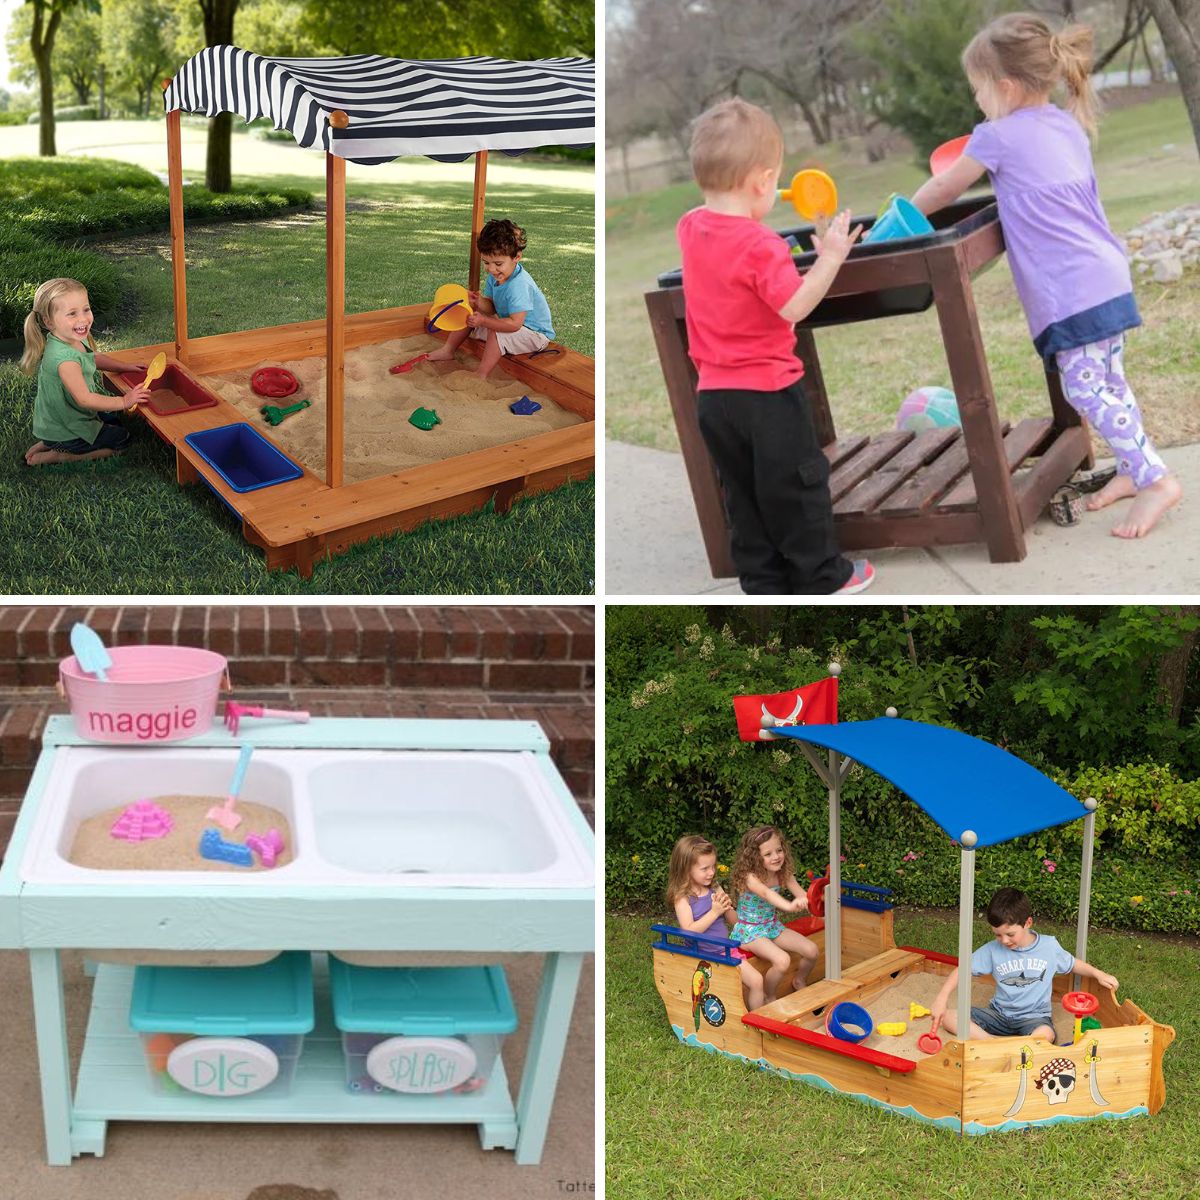 4 images of diy sandbox for kids.